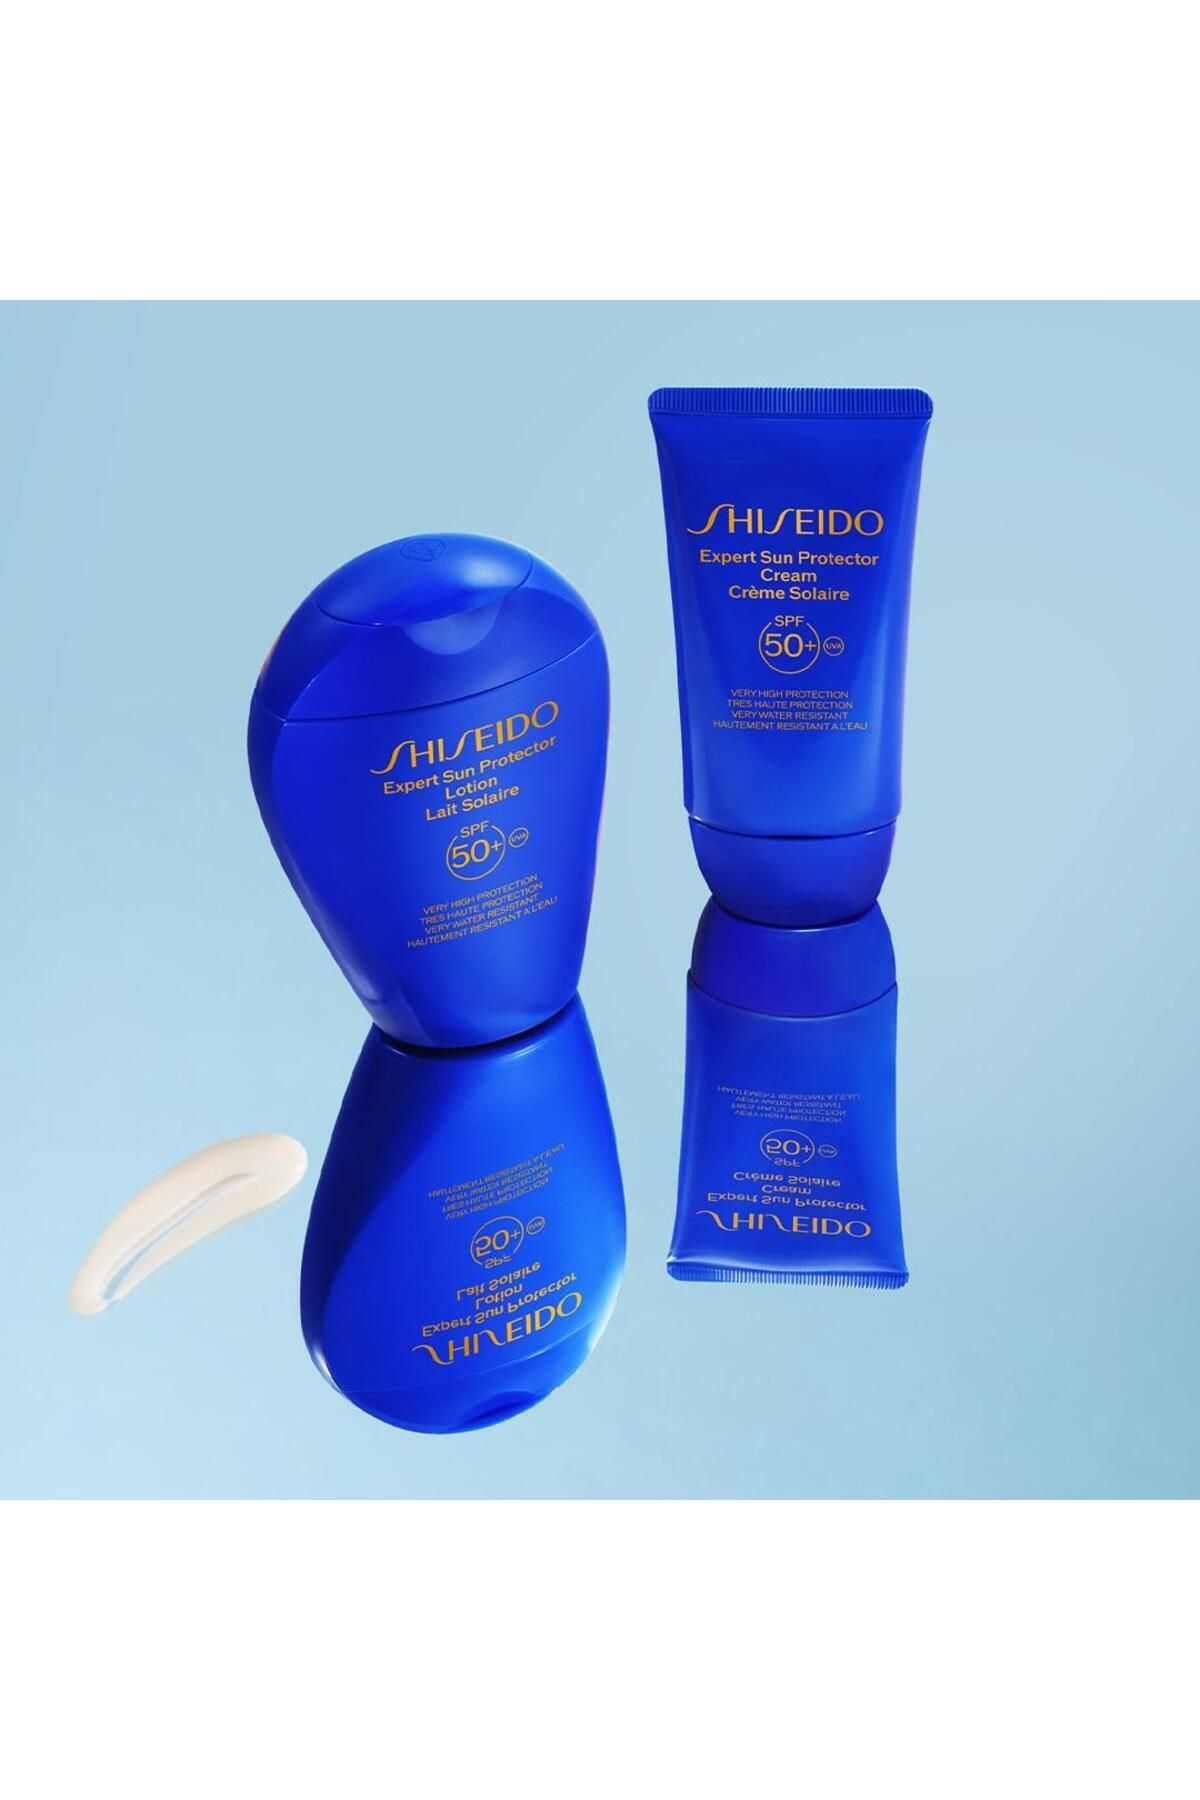 Shiseido لوسیون حفاظتی ضد آفتاب GSC Blue Expert SPF30 150 میلی لیتر